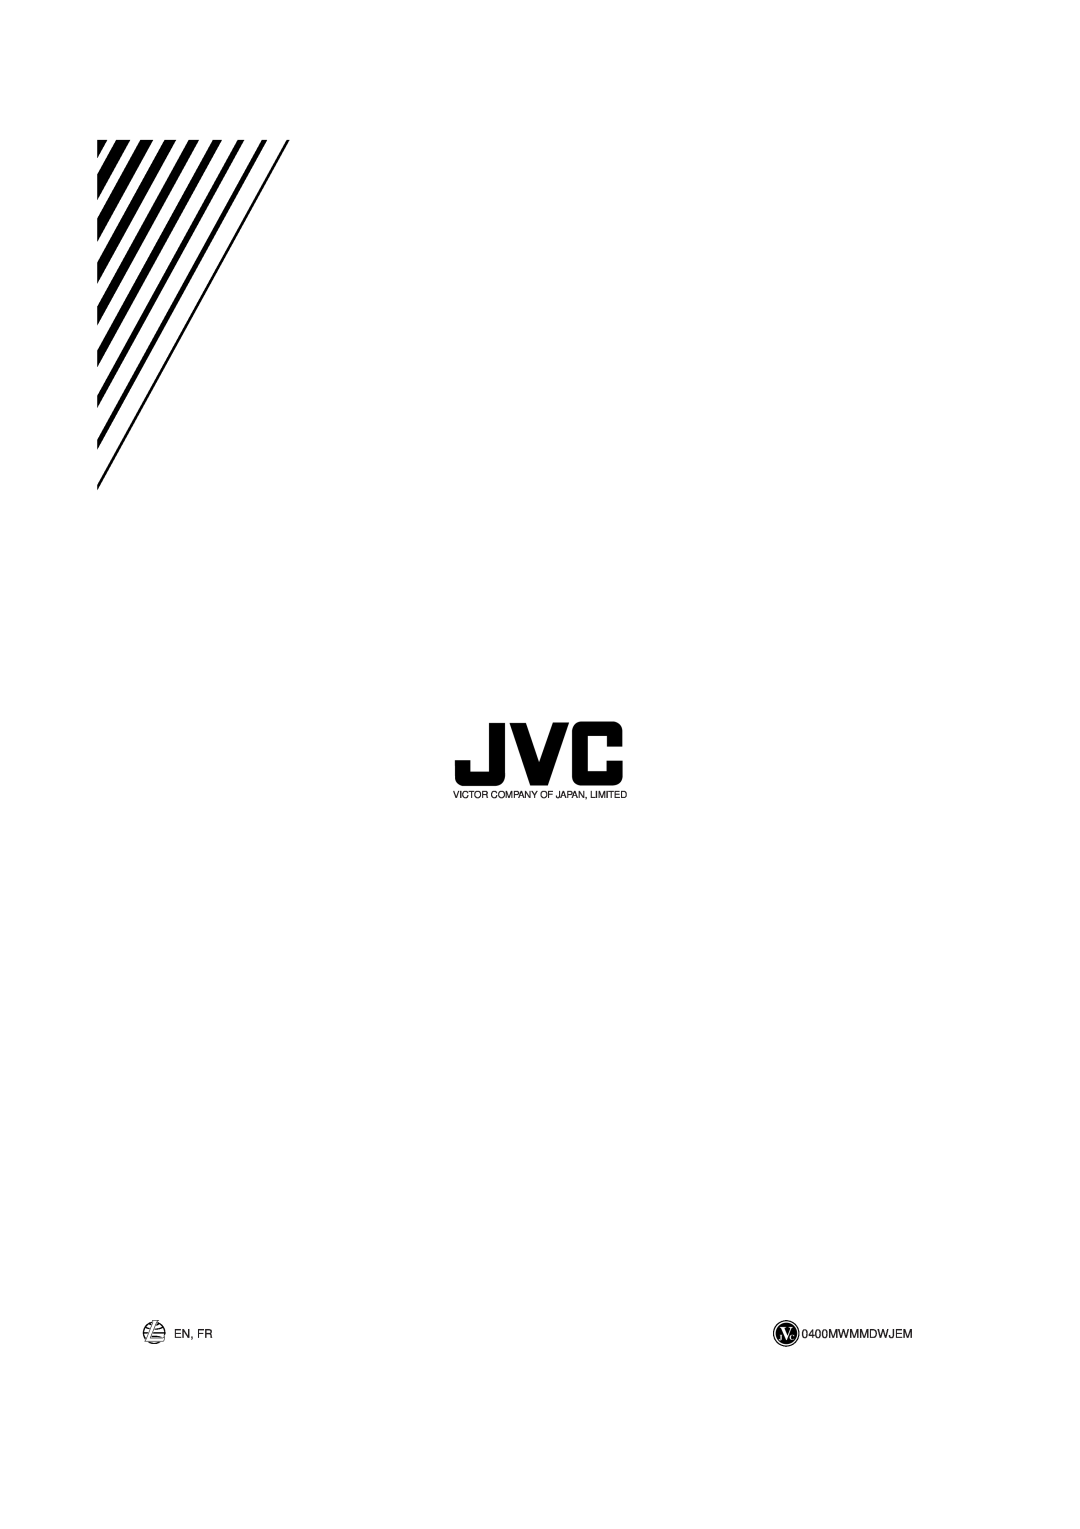 JVC FS-V30 manual En, Fr, 0400MWMMDWJEM, Victor Company Of Japan, Limited 